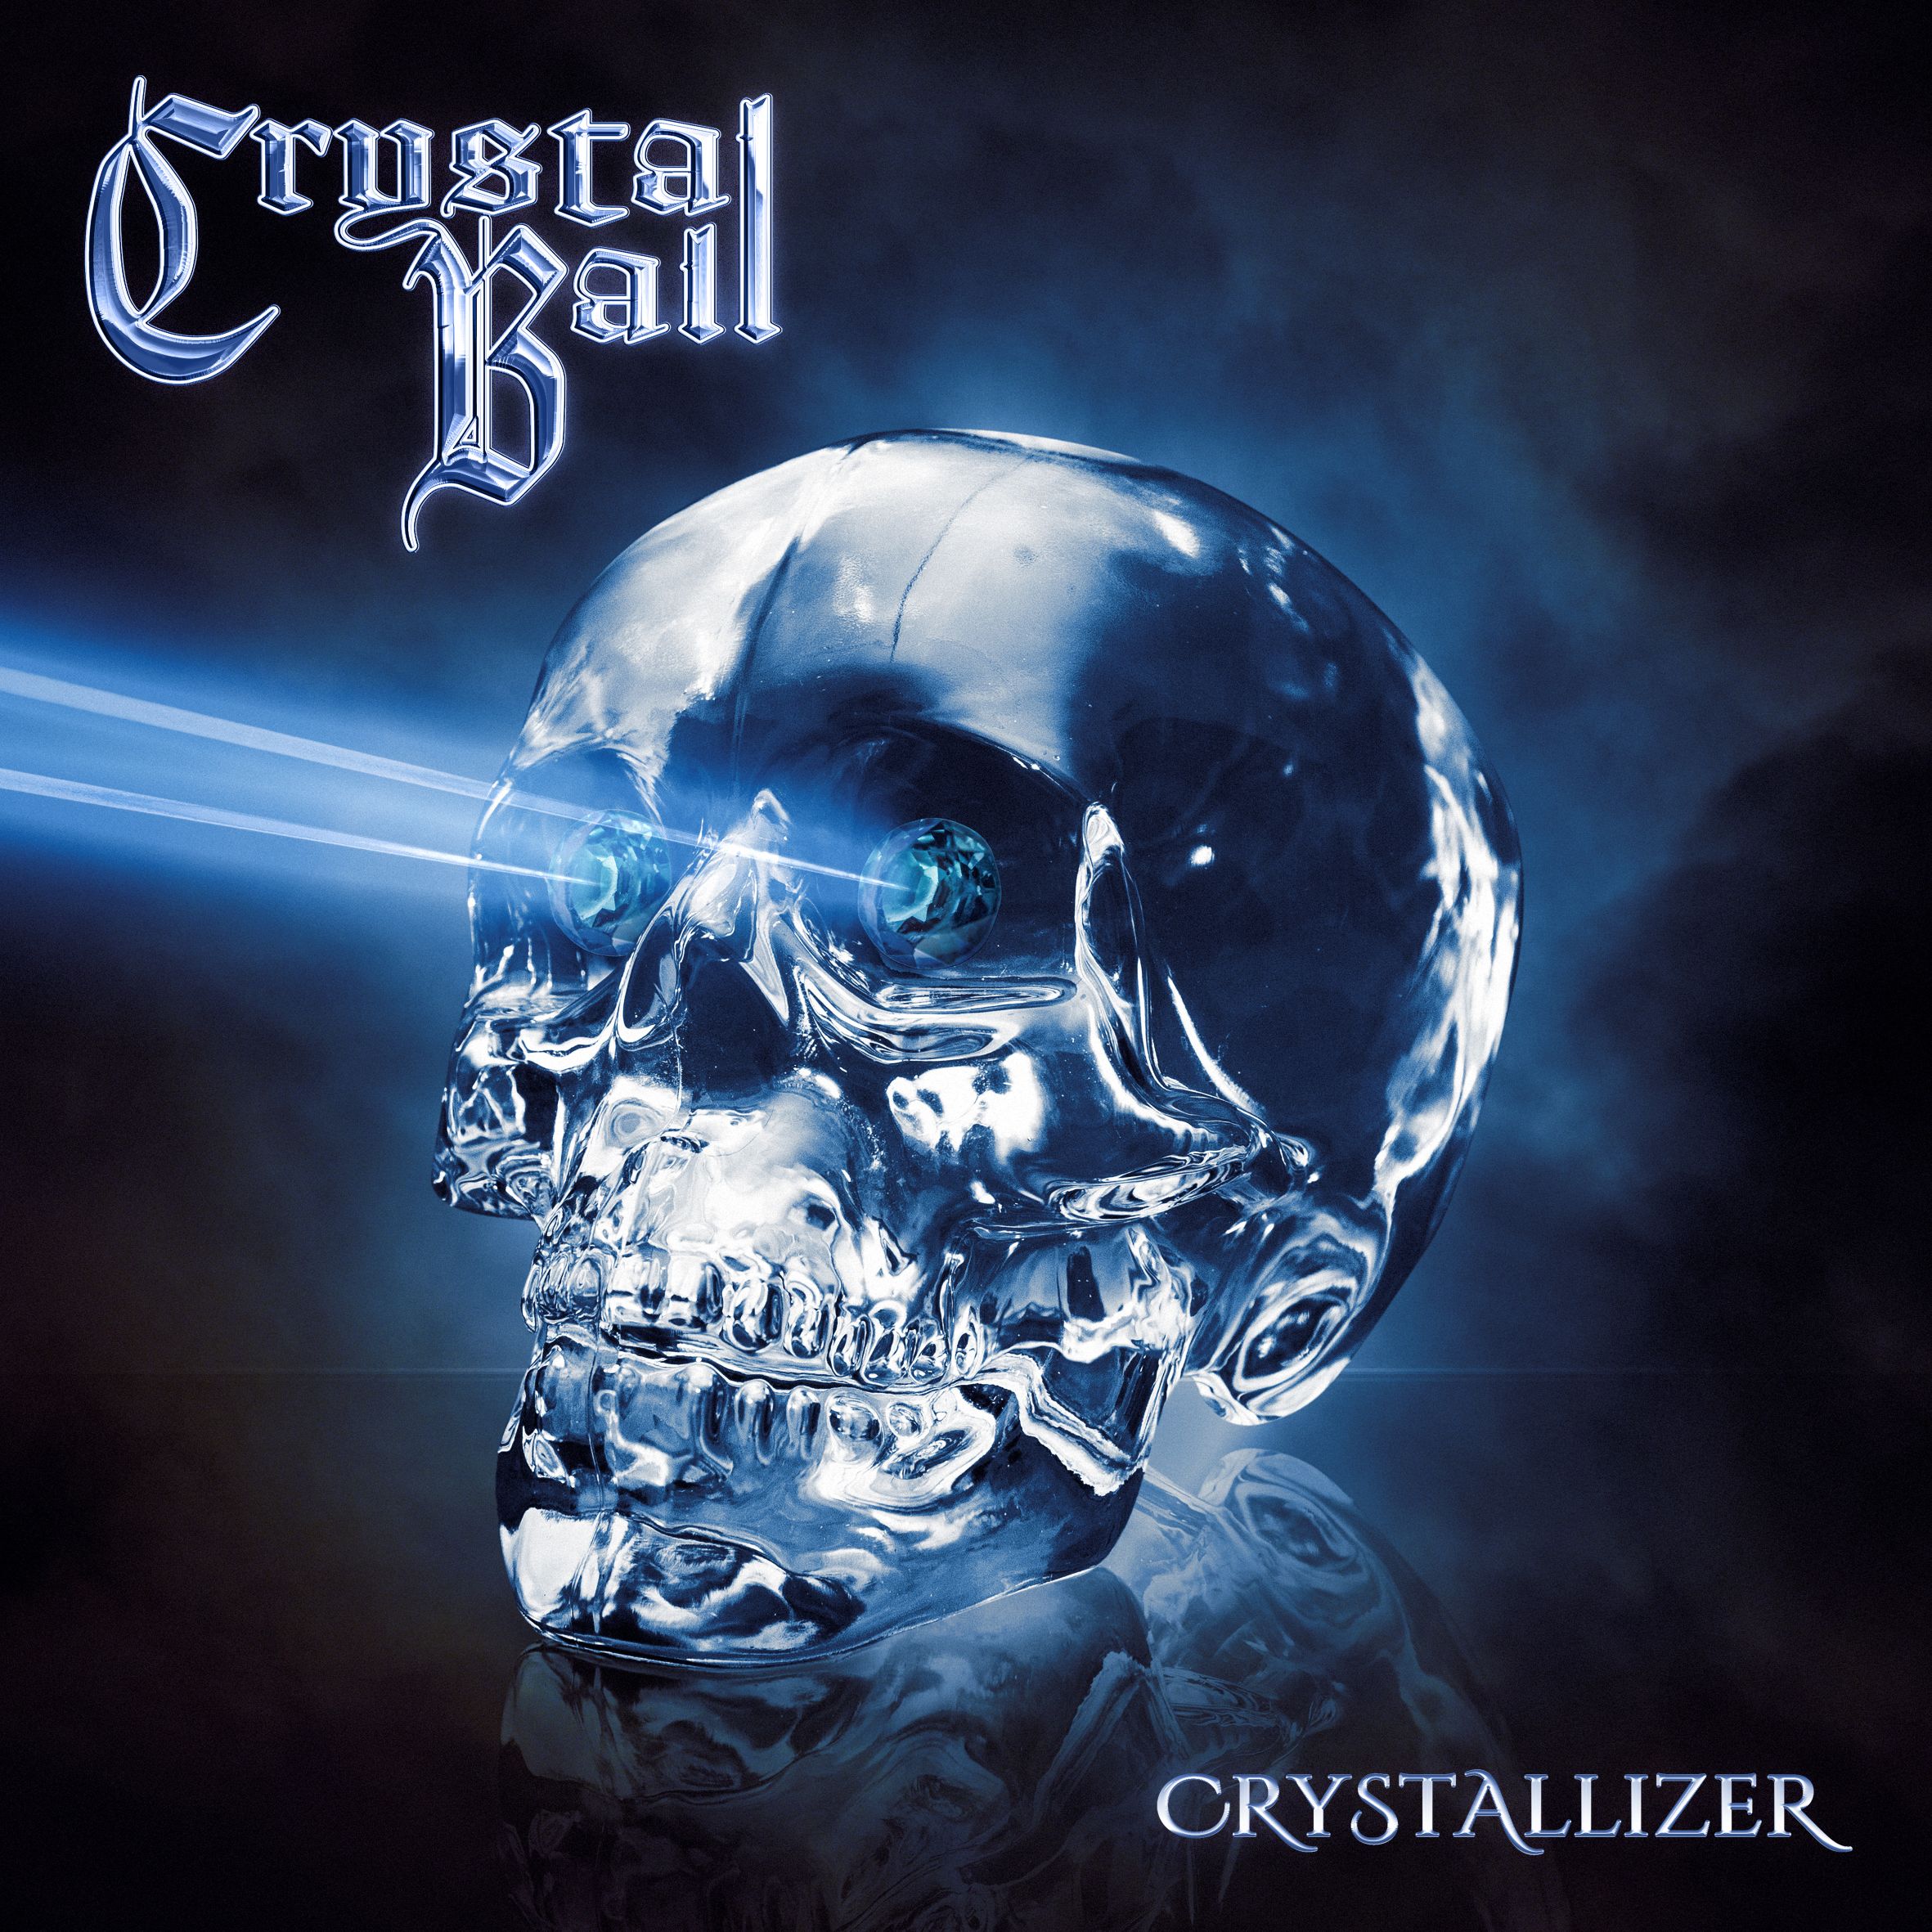 CrystalBall_Crystallizer_Cover_MASCD1009